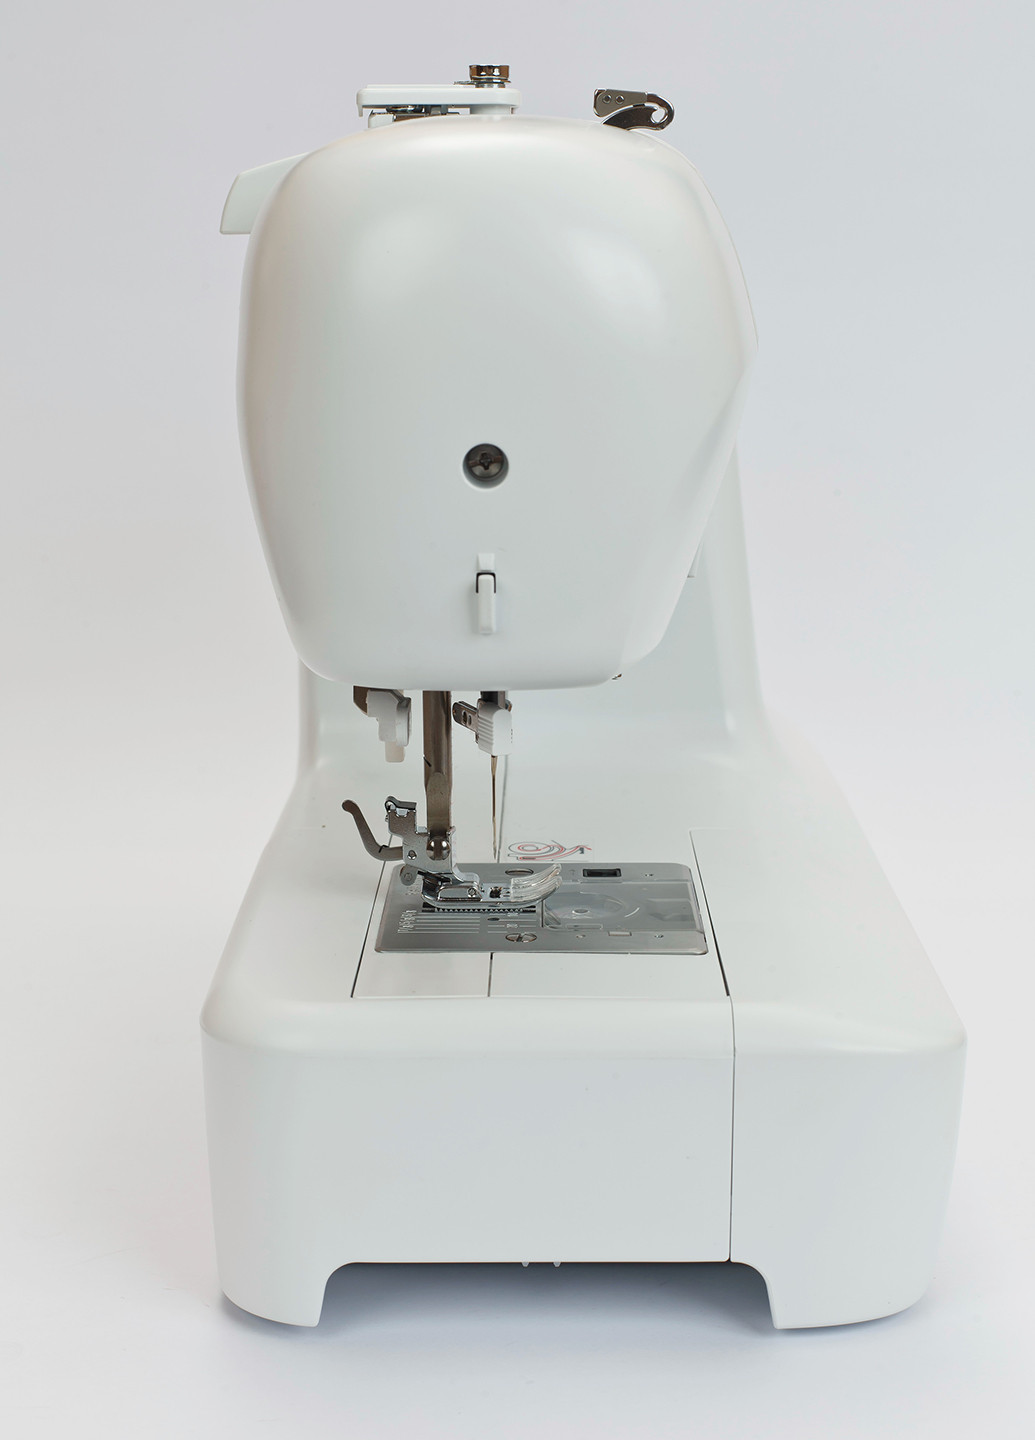 Швейная машина Minerva mc400 (138878040)